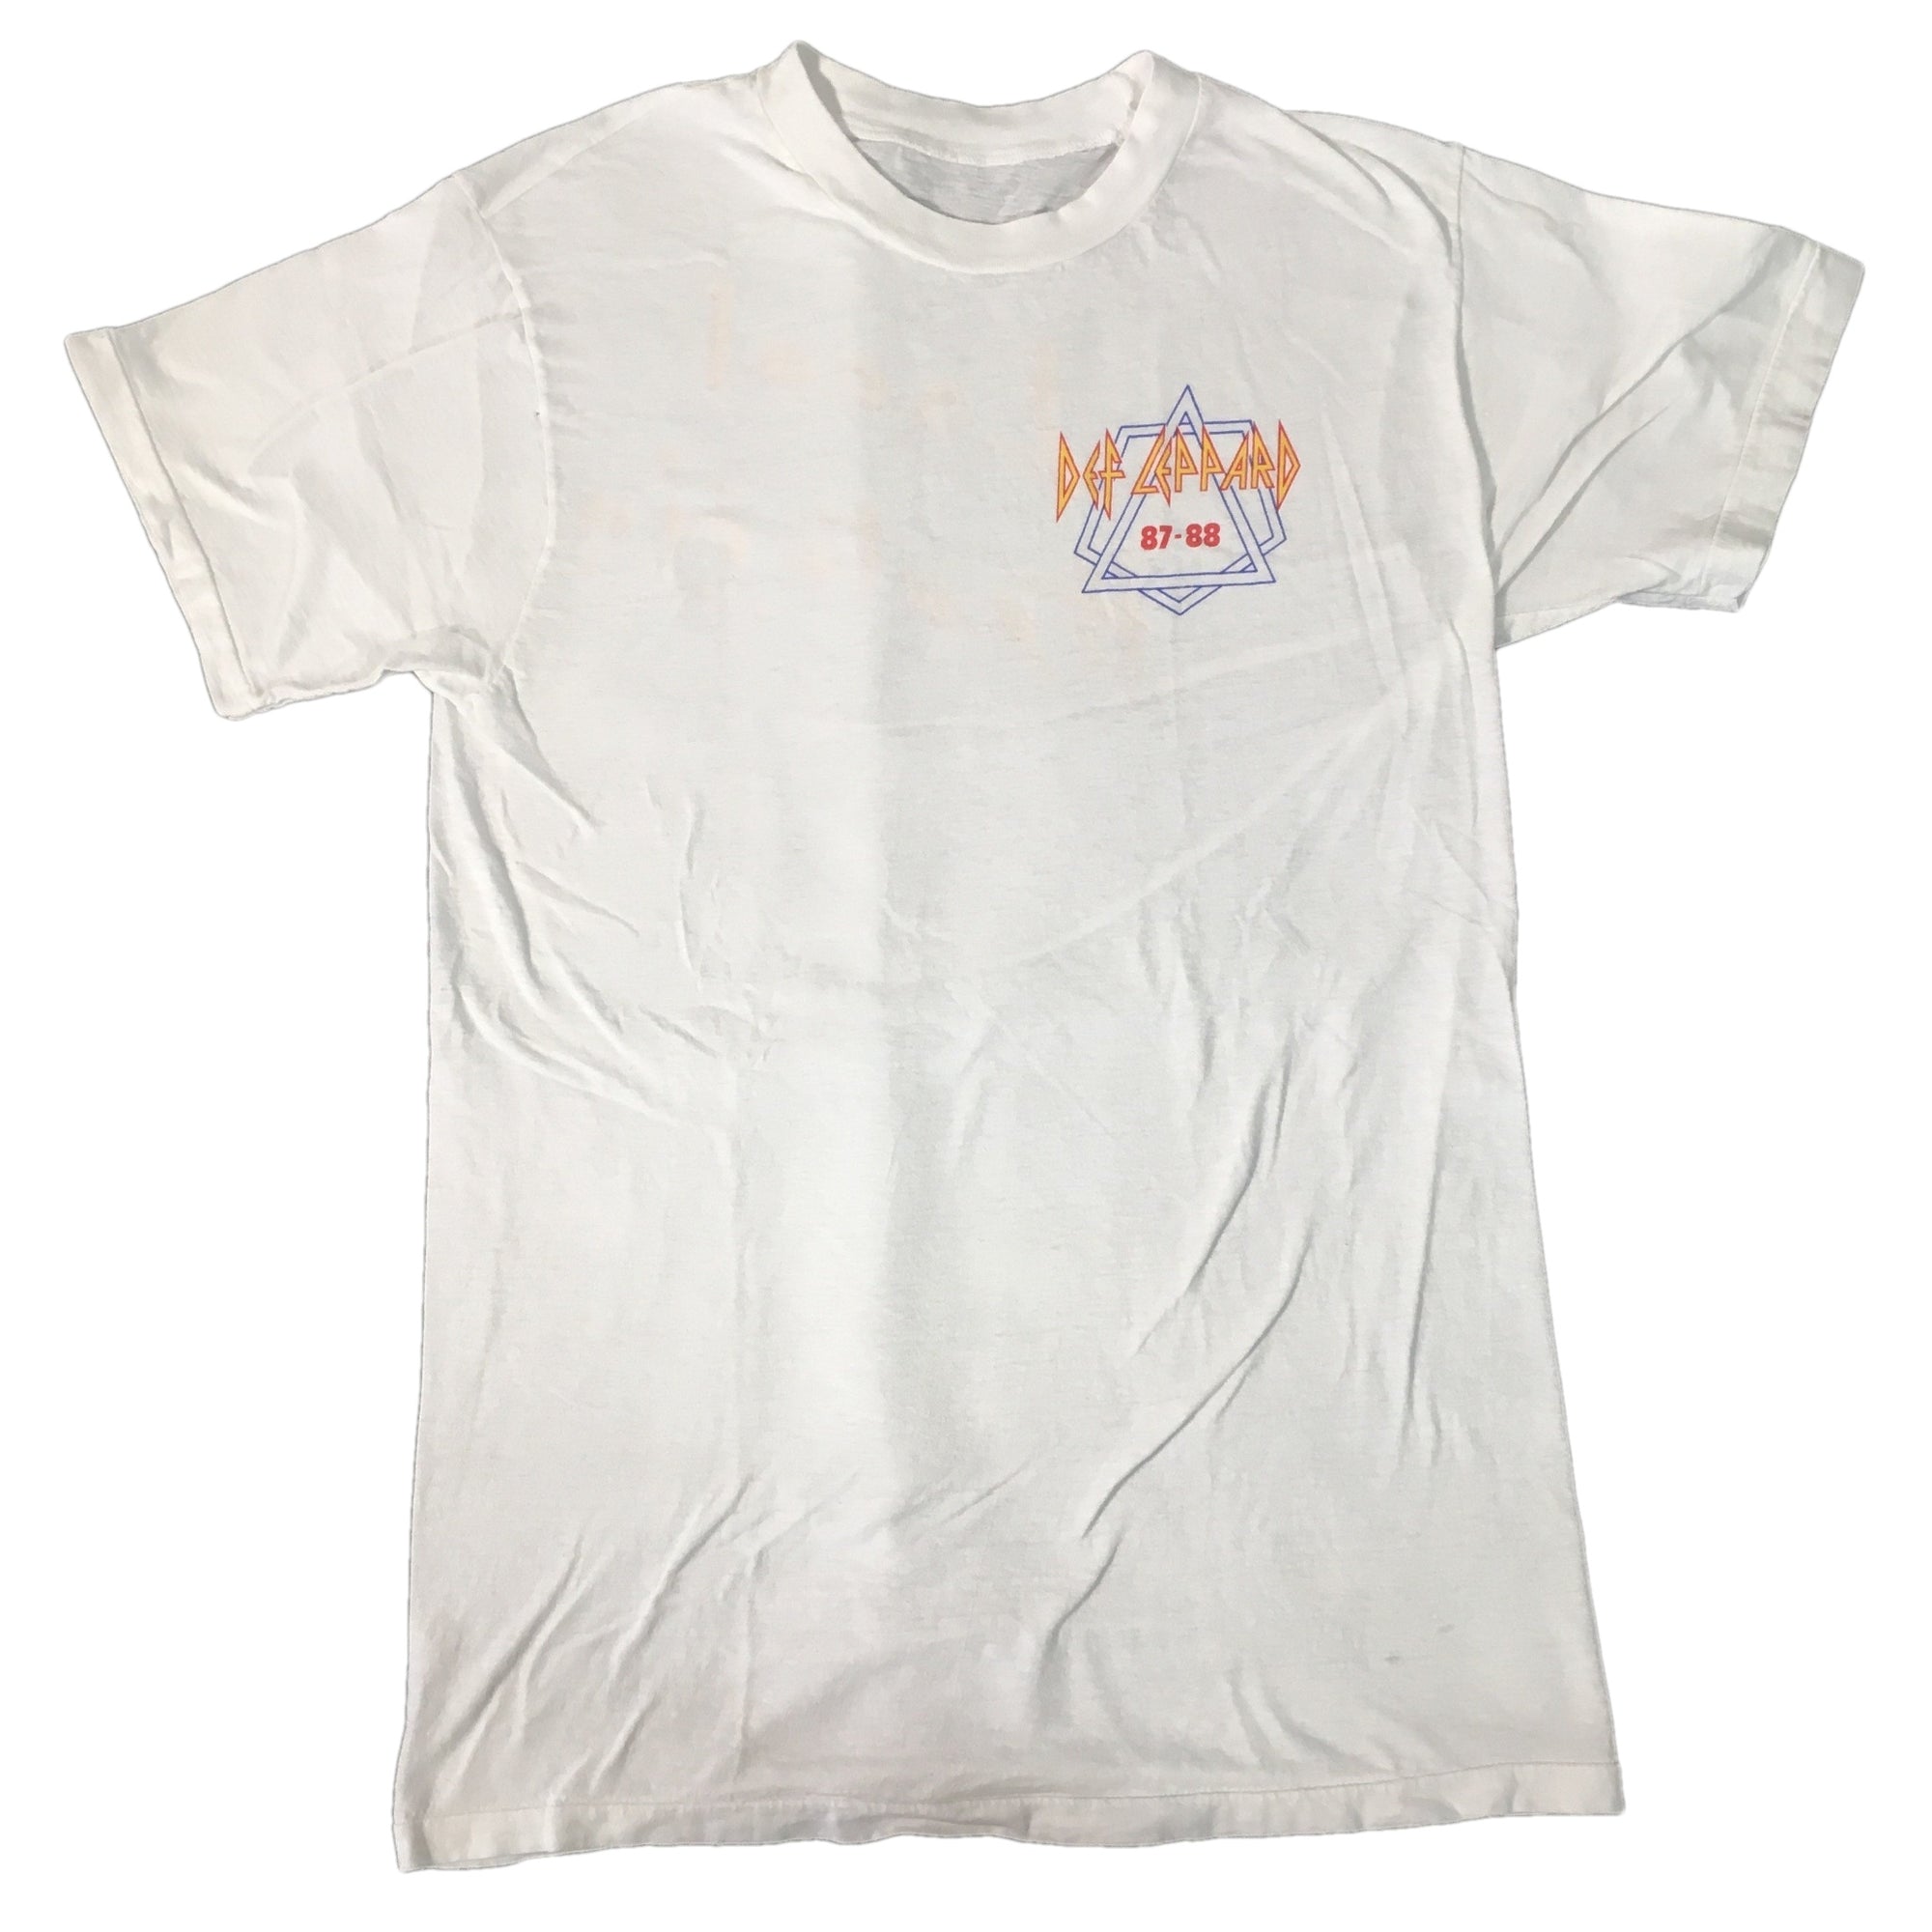 Vintage Def Leppard "Local Hysteria" T-shirt - jointcustodydc